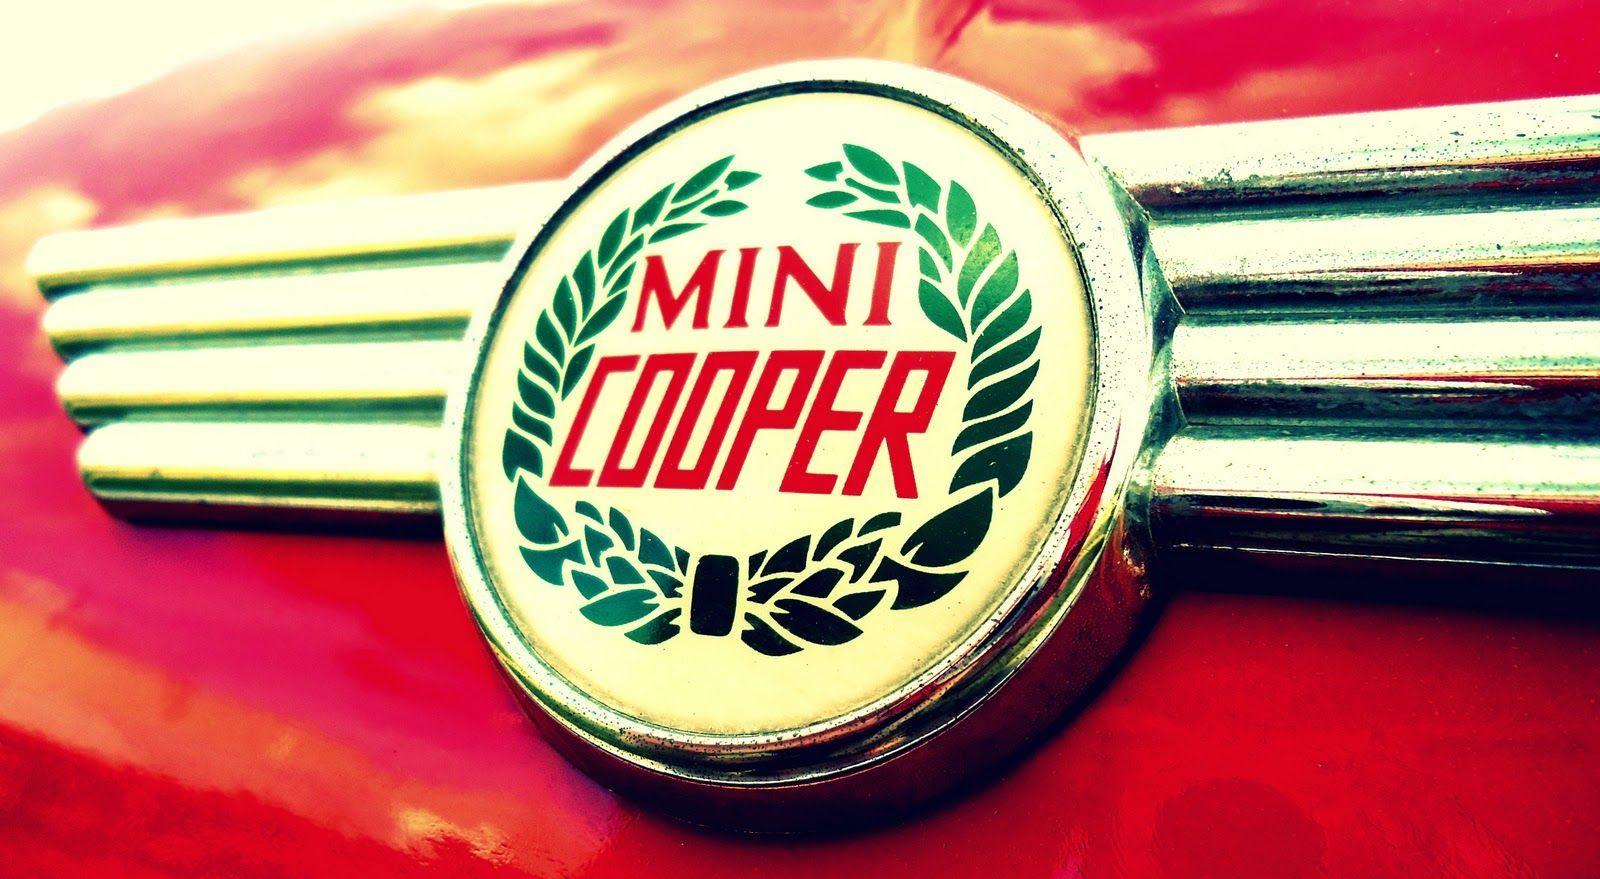 Classic Mini Cooper Logo